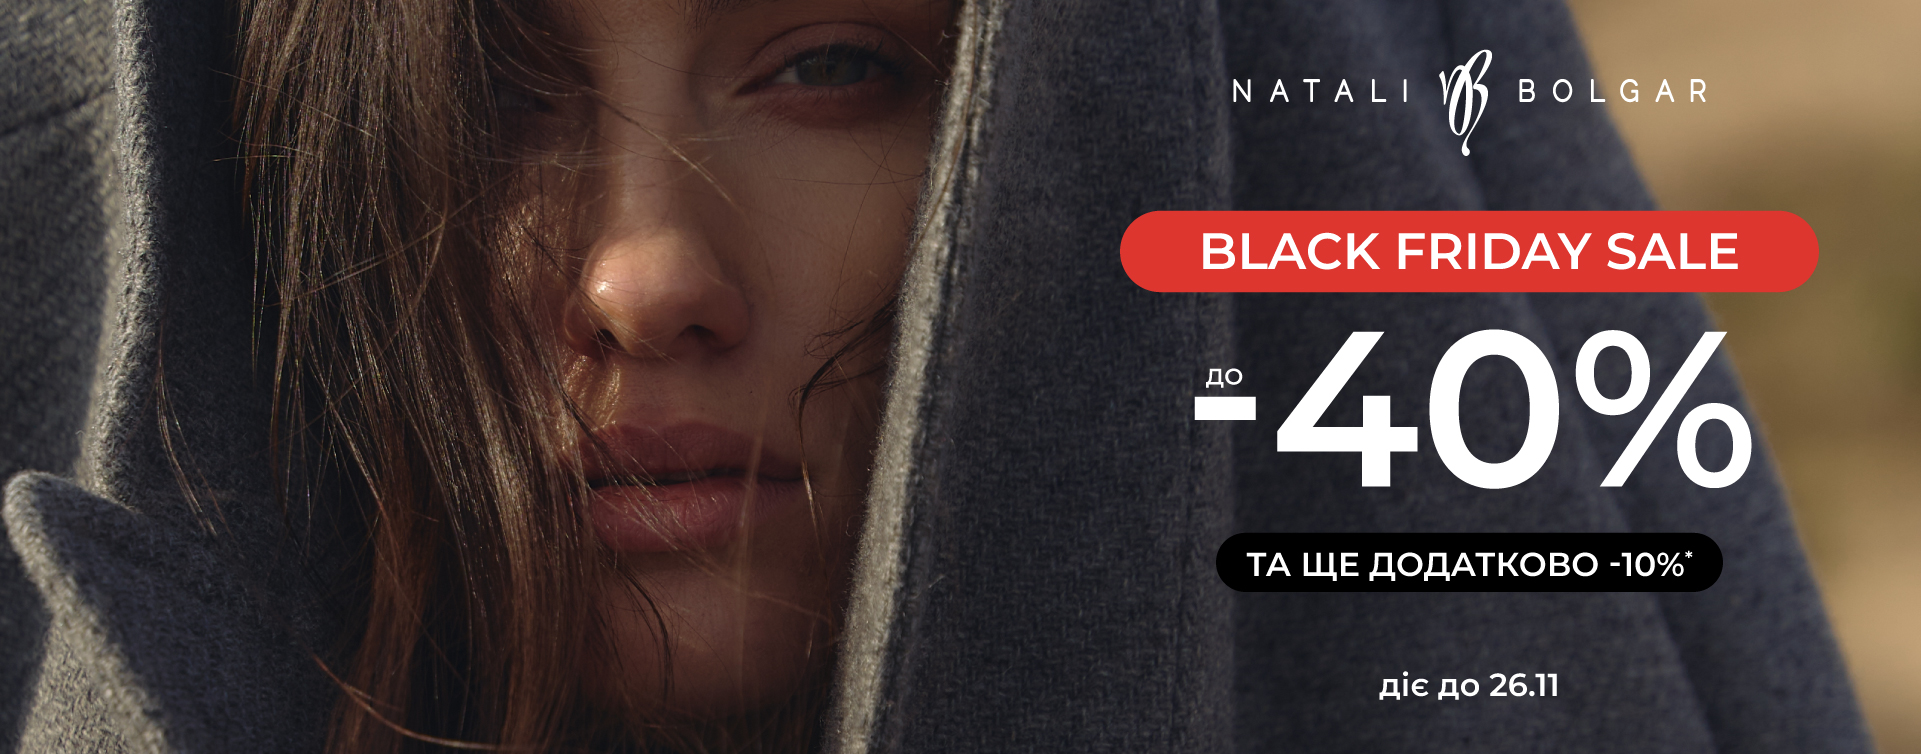 Natali Bolgar on Black Friday sale